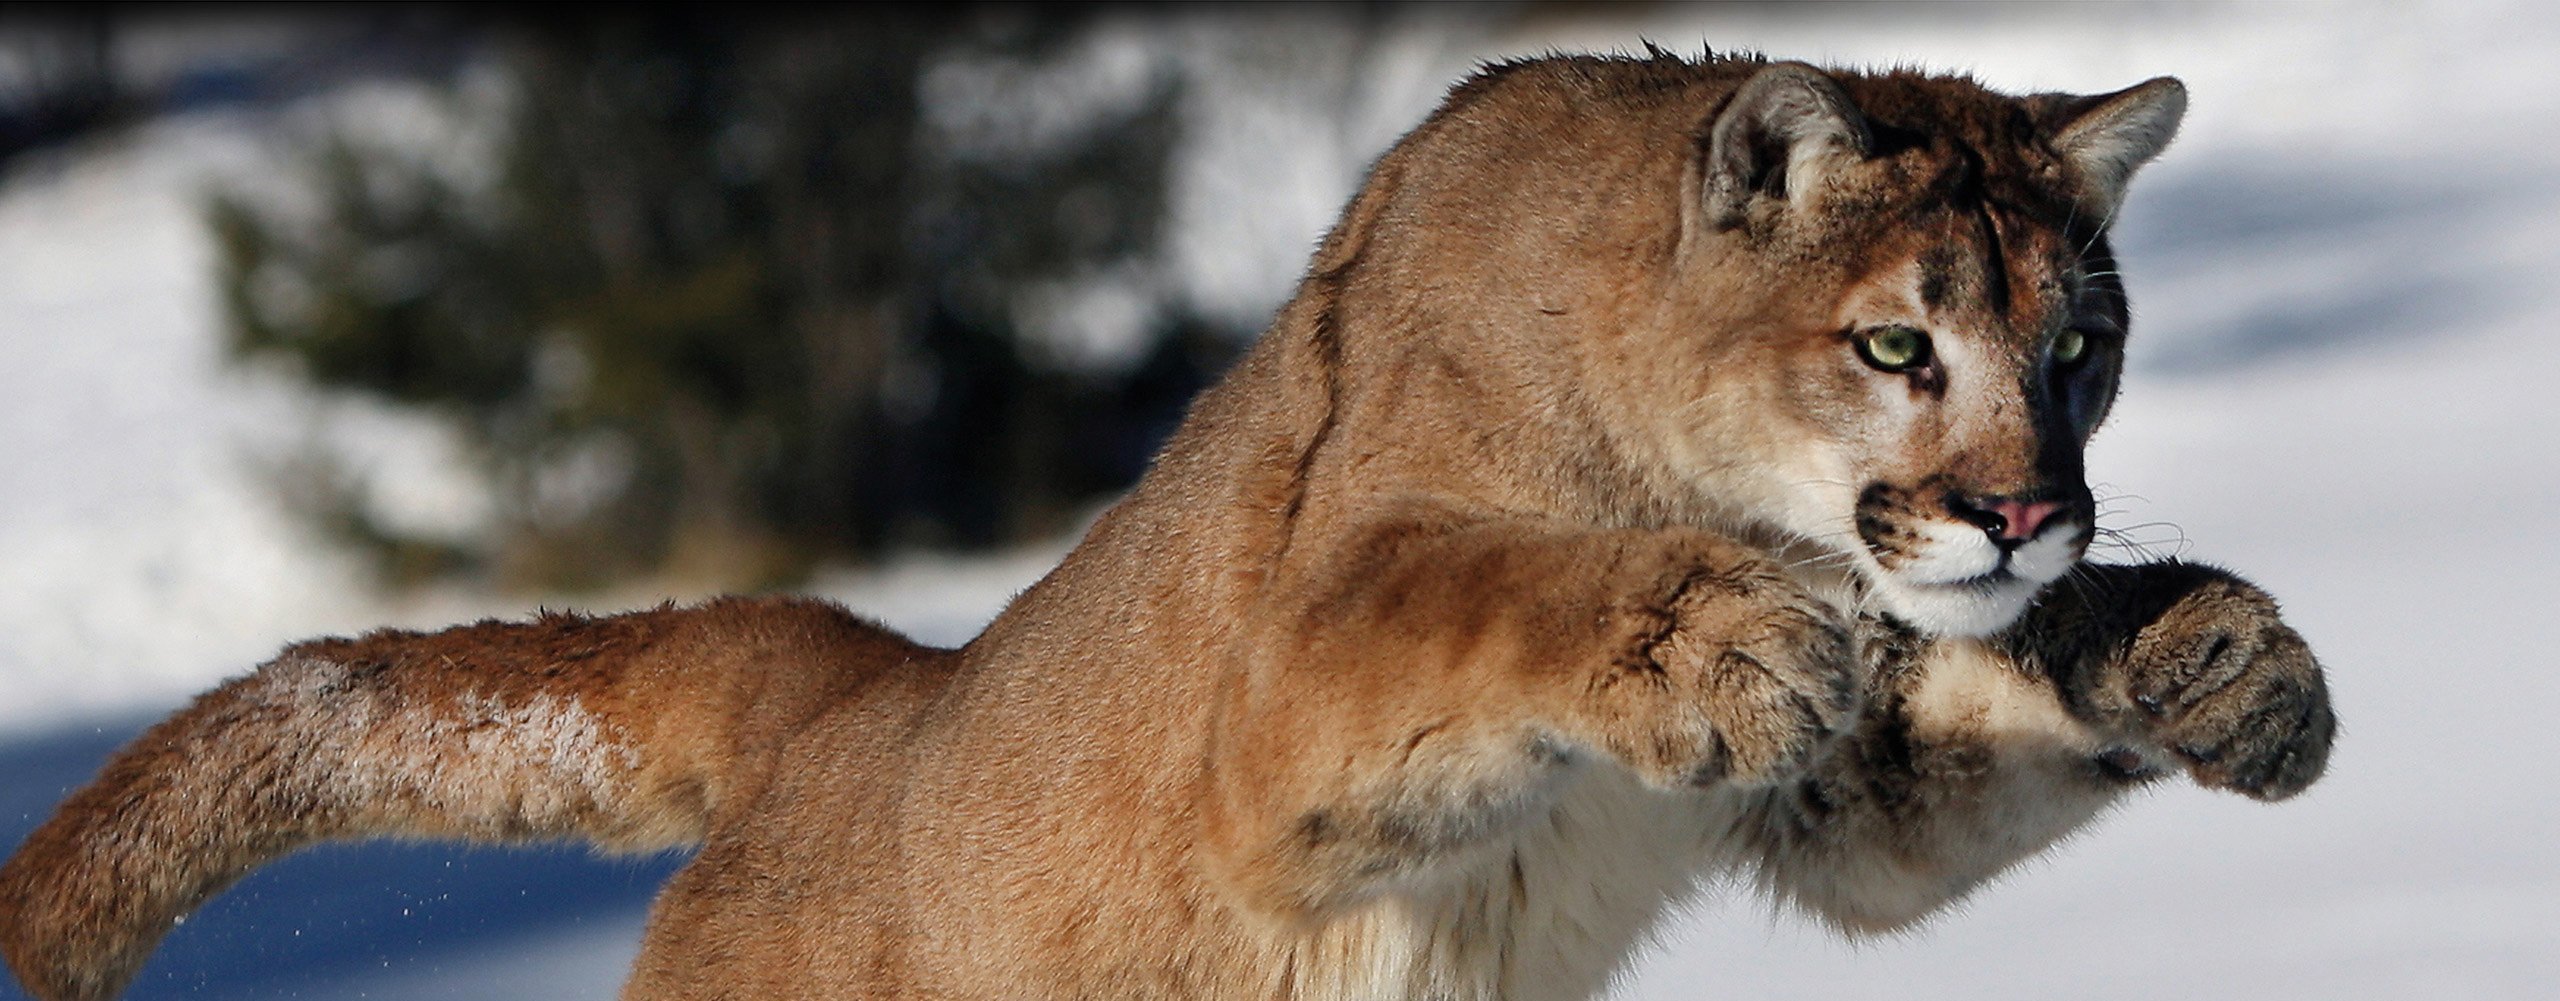 Puma of mountain lion